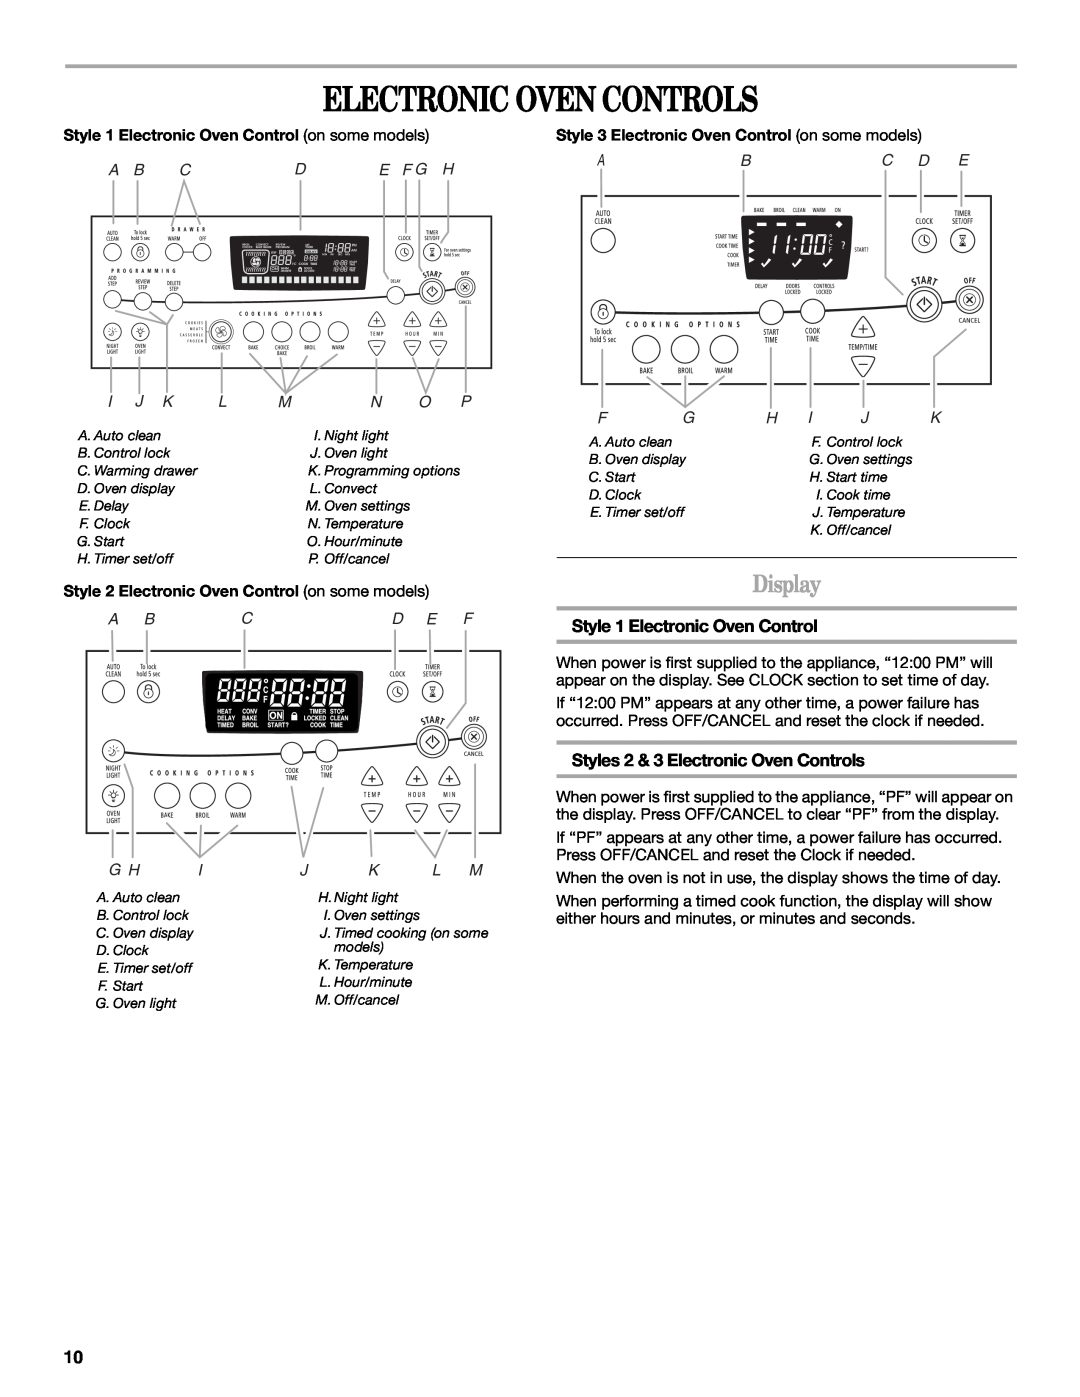 Whirlpool 9758899 Electronic Oven Controls, Display, Style 1 Electronic Oven Control, I J K, A Bcd E F, Abc D E, J K L M 